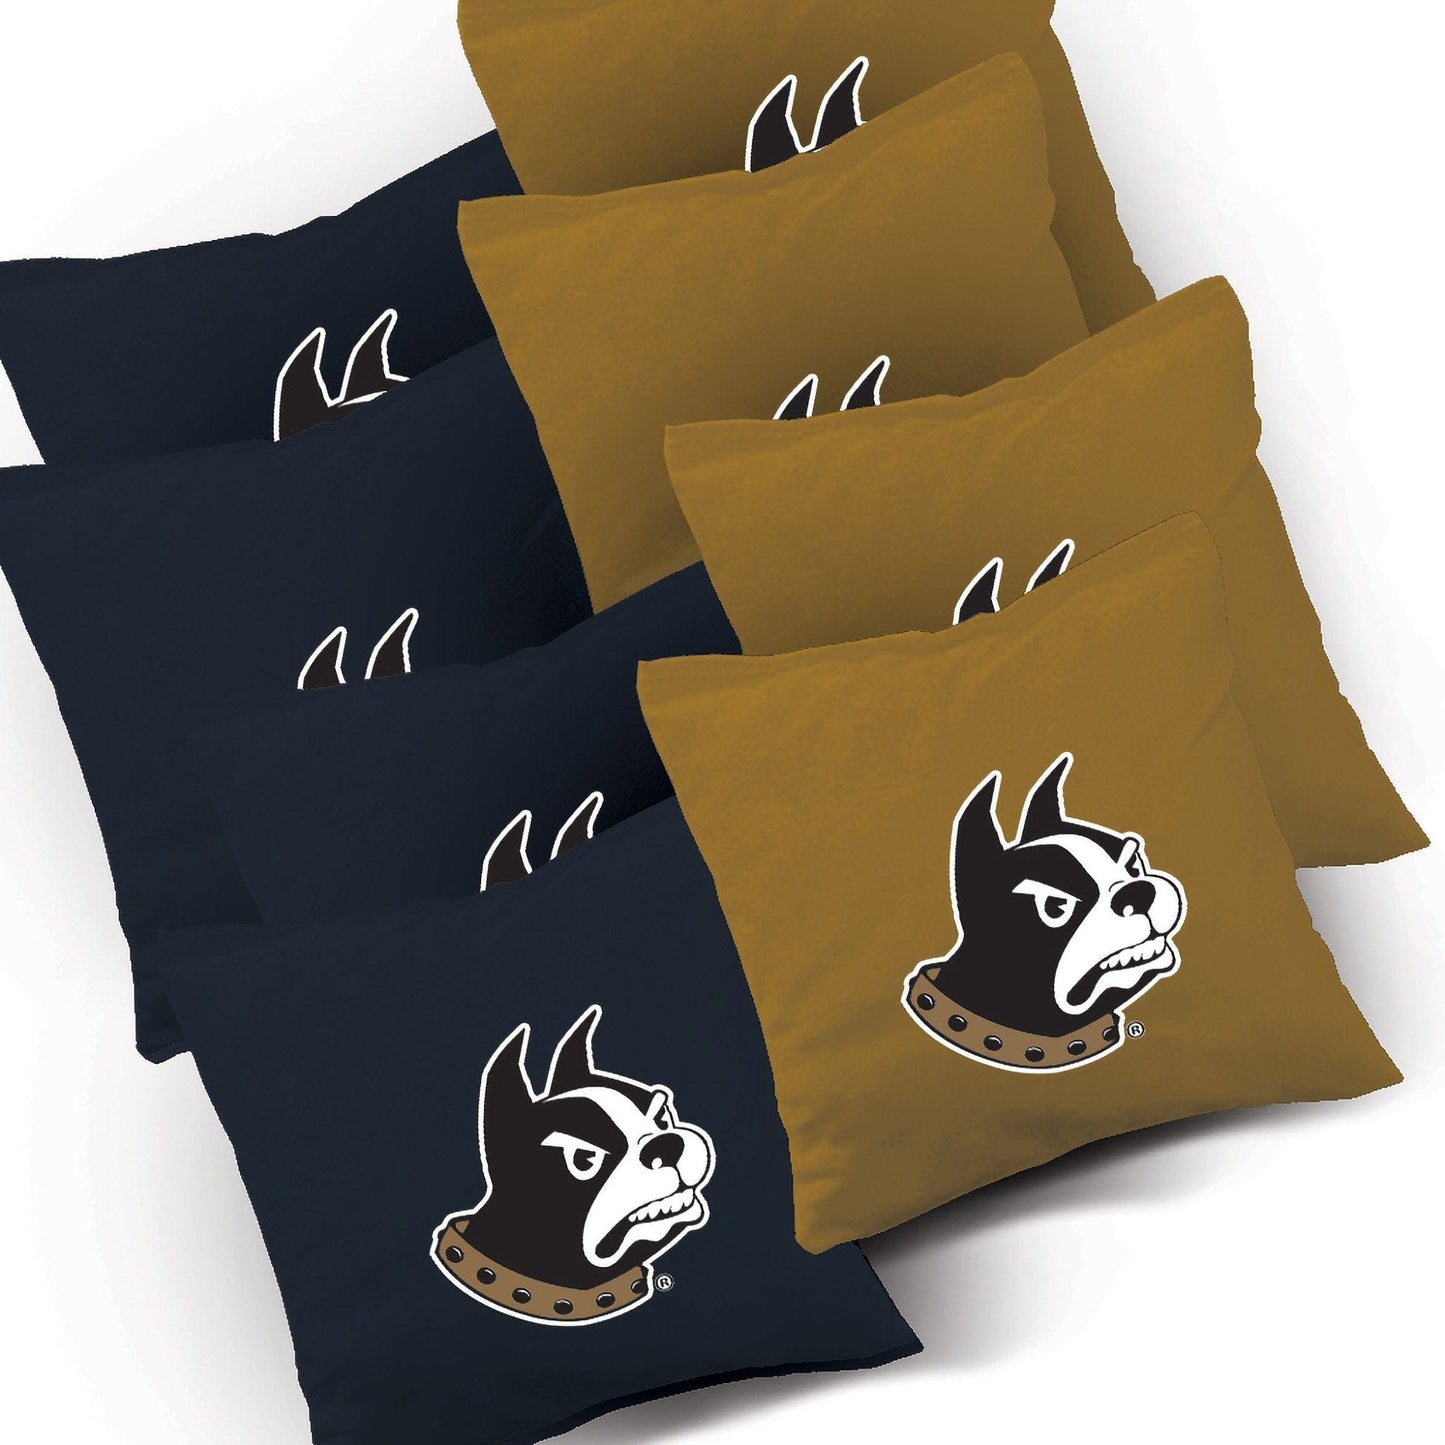 Wofford Striped team logo bags